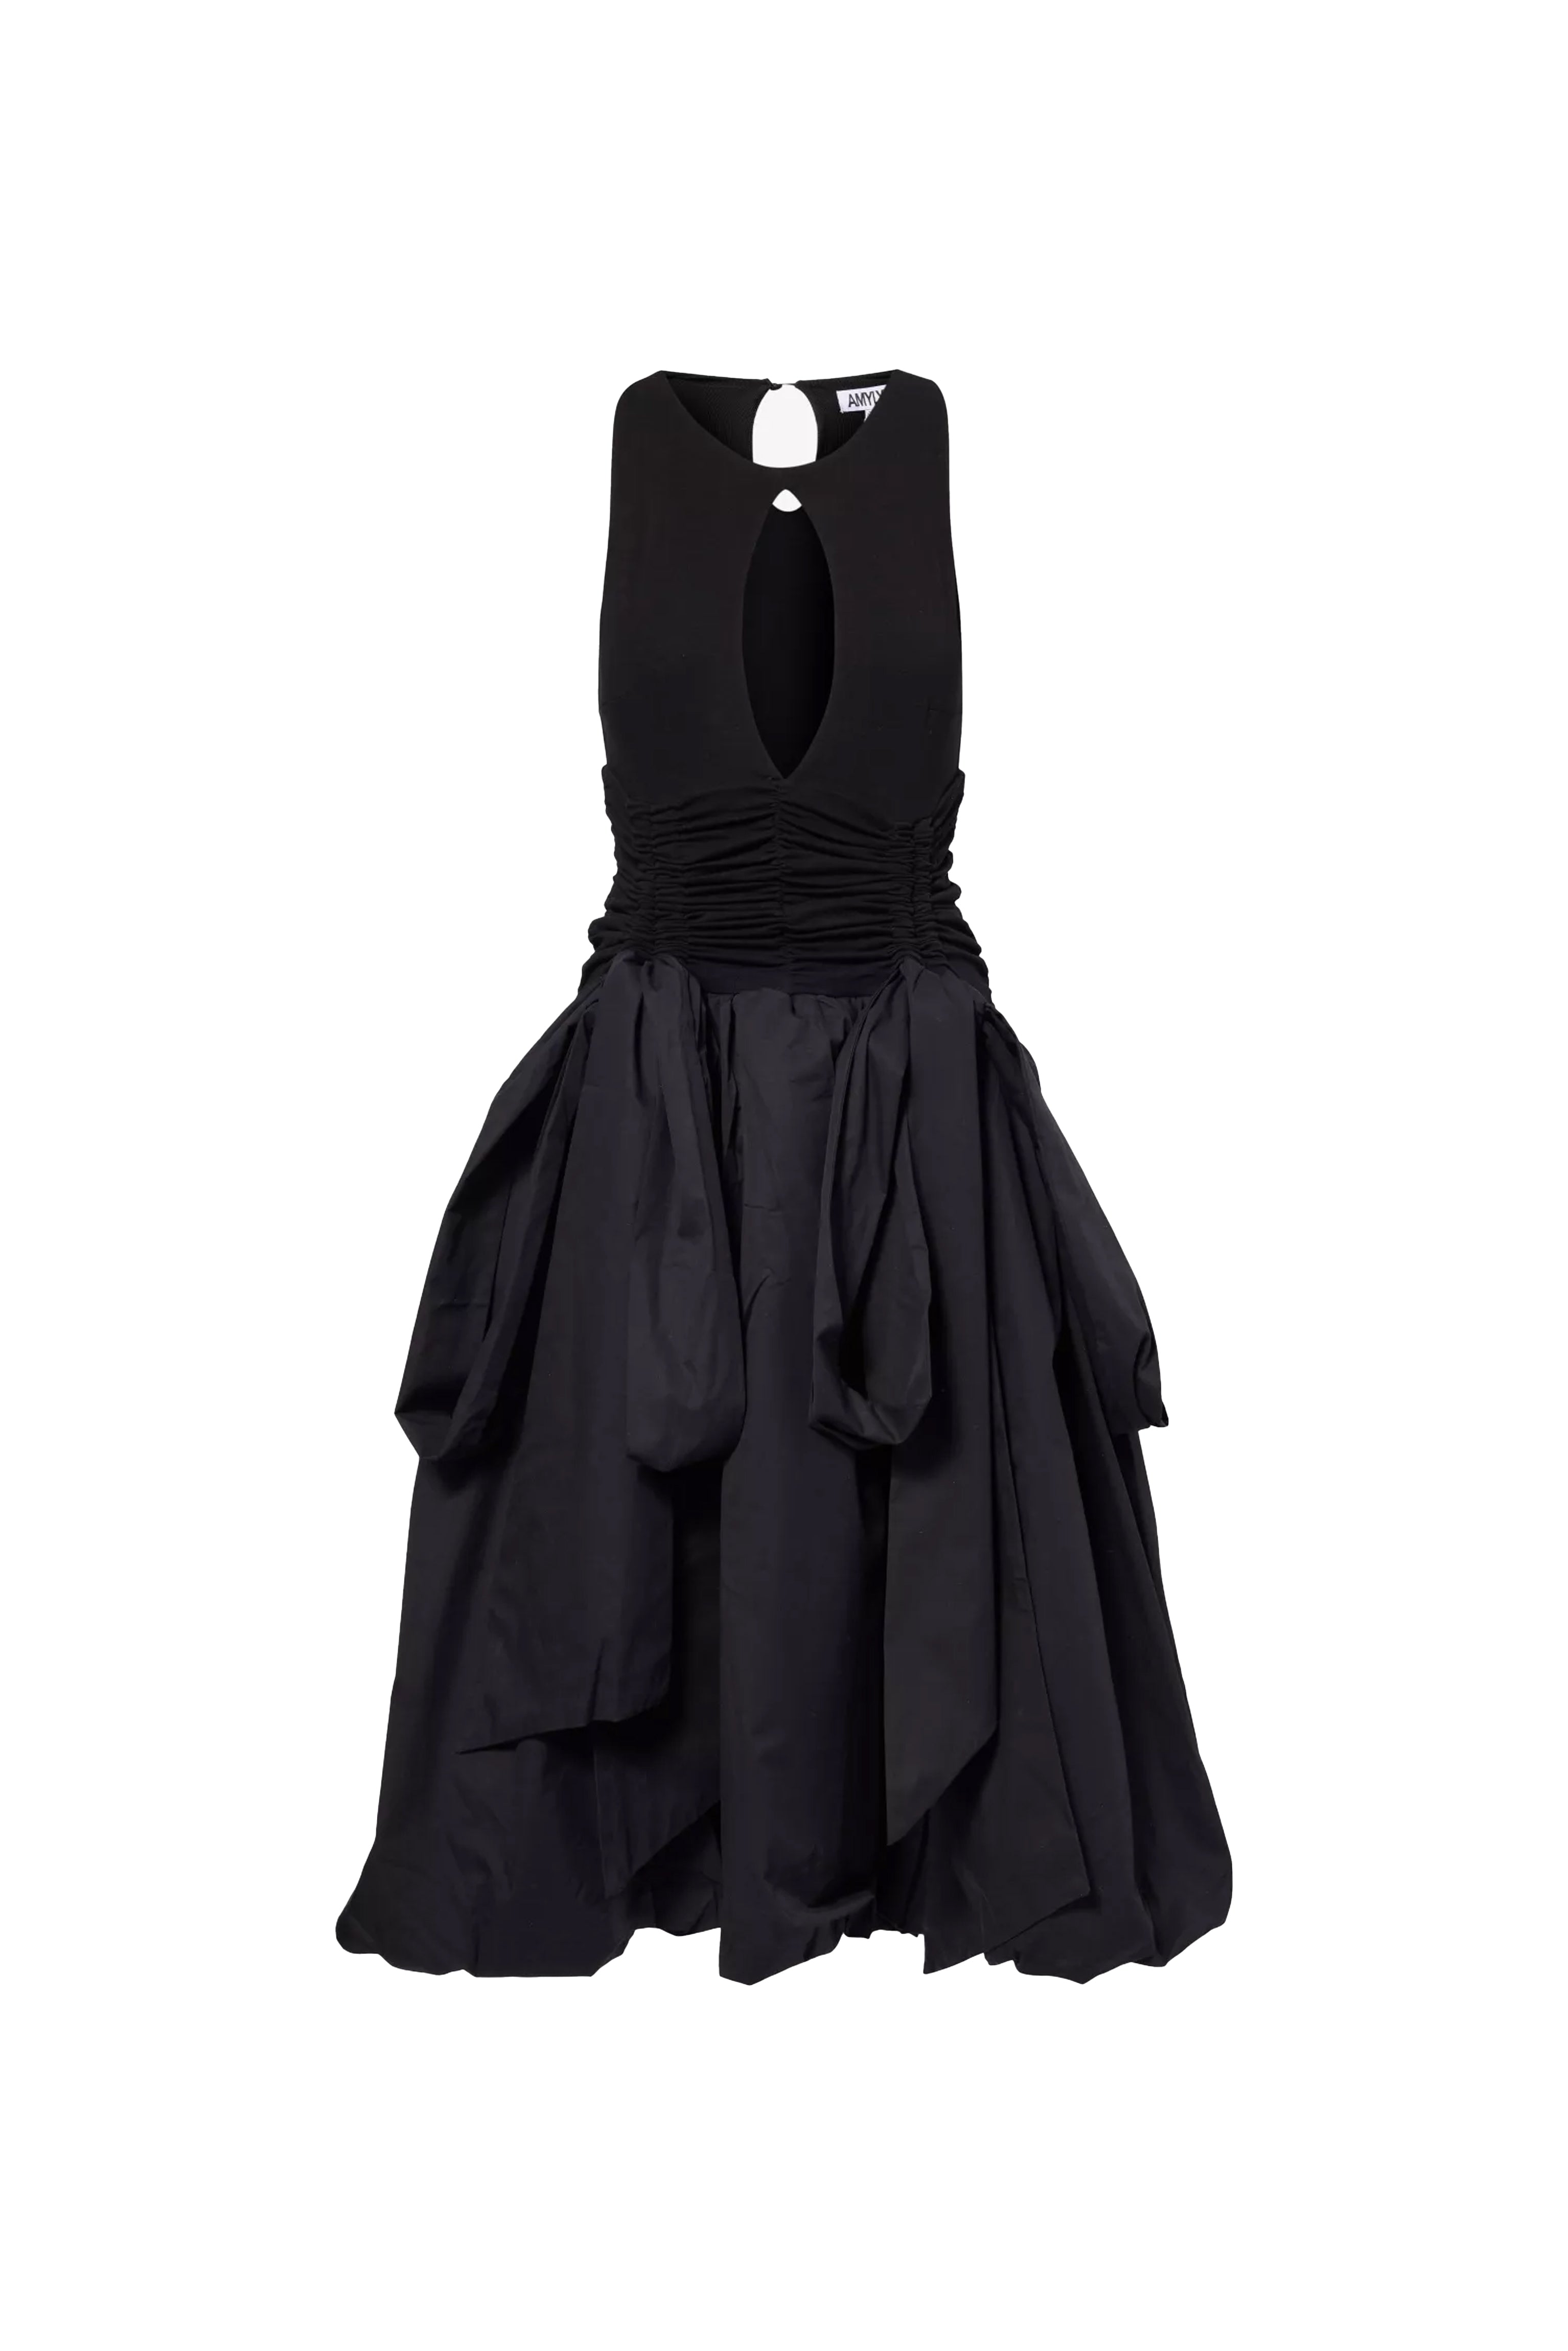 Bodhi Black Puffball Midi Dress